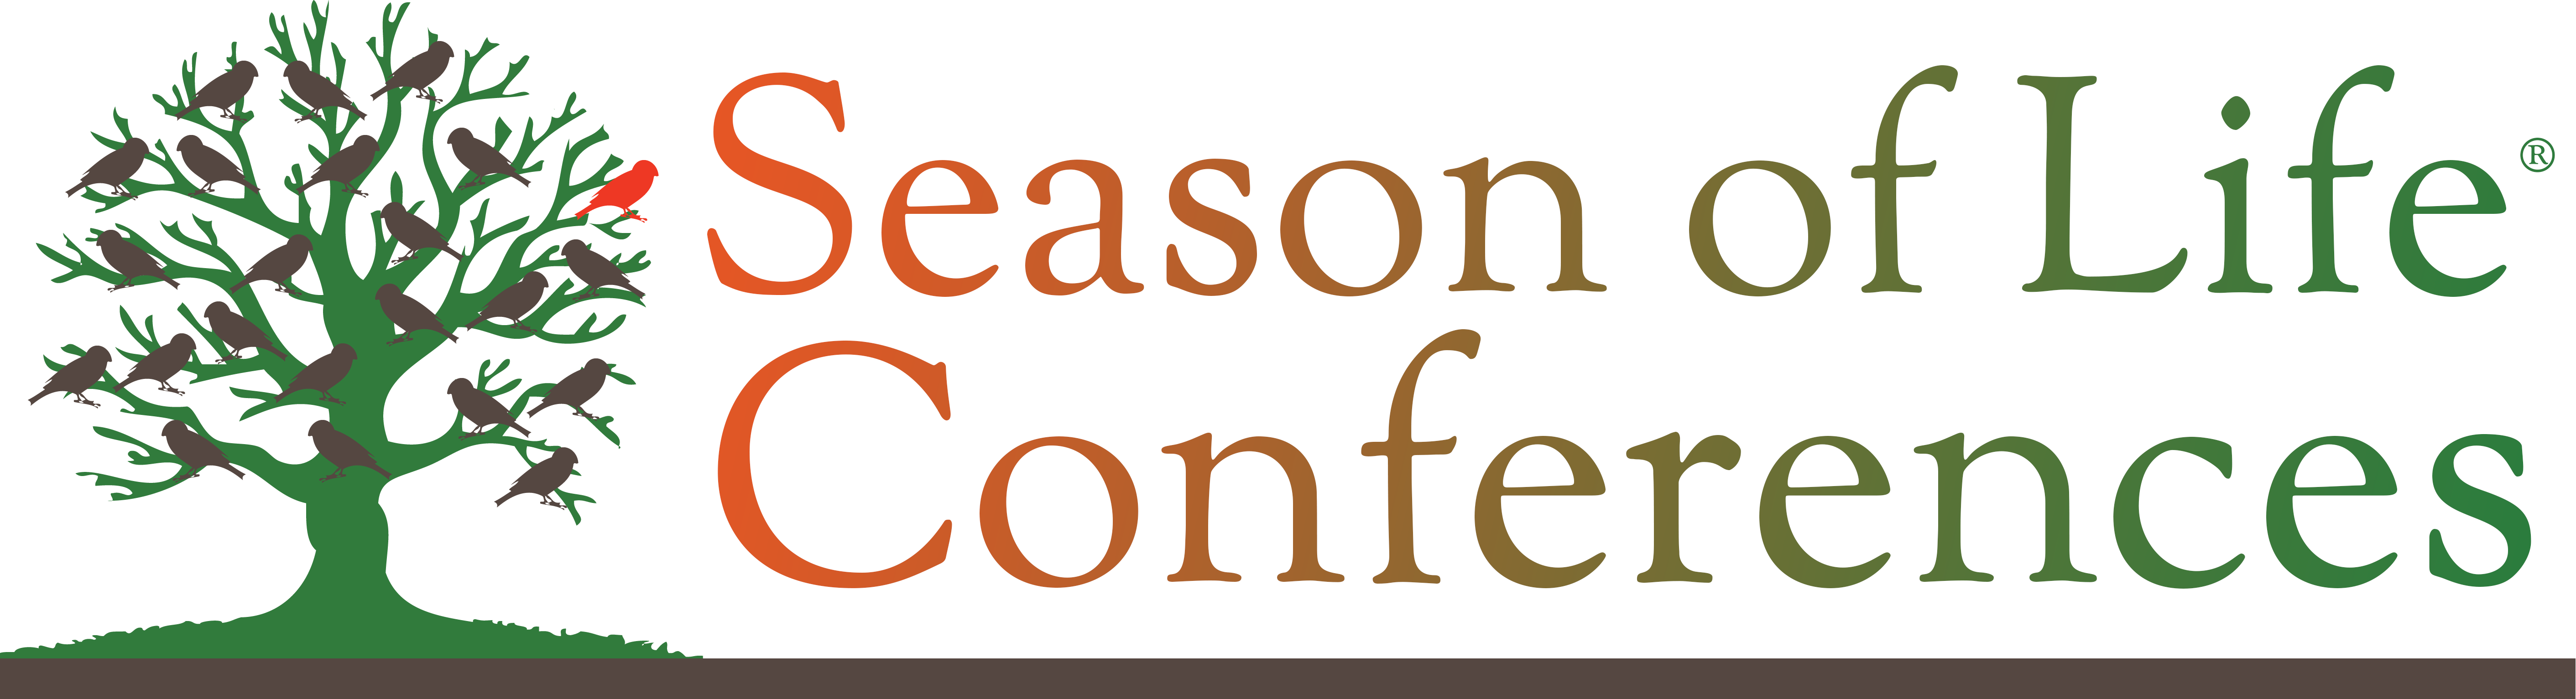 Season of Life Conference